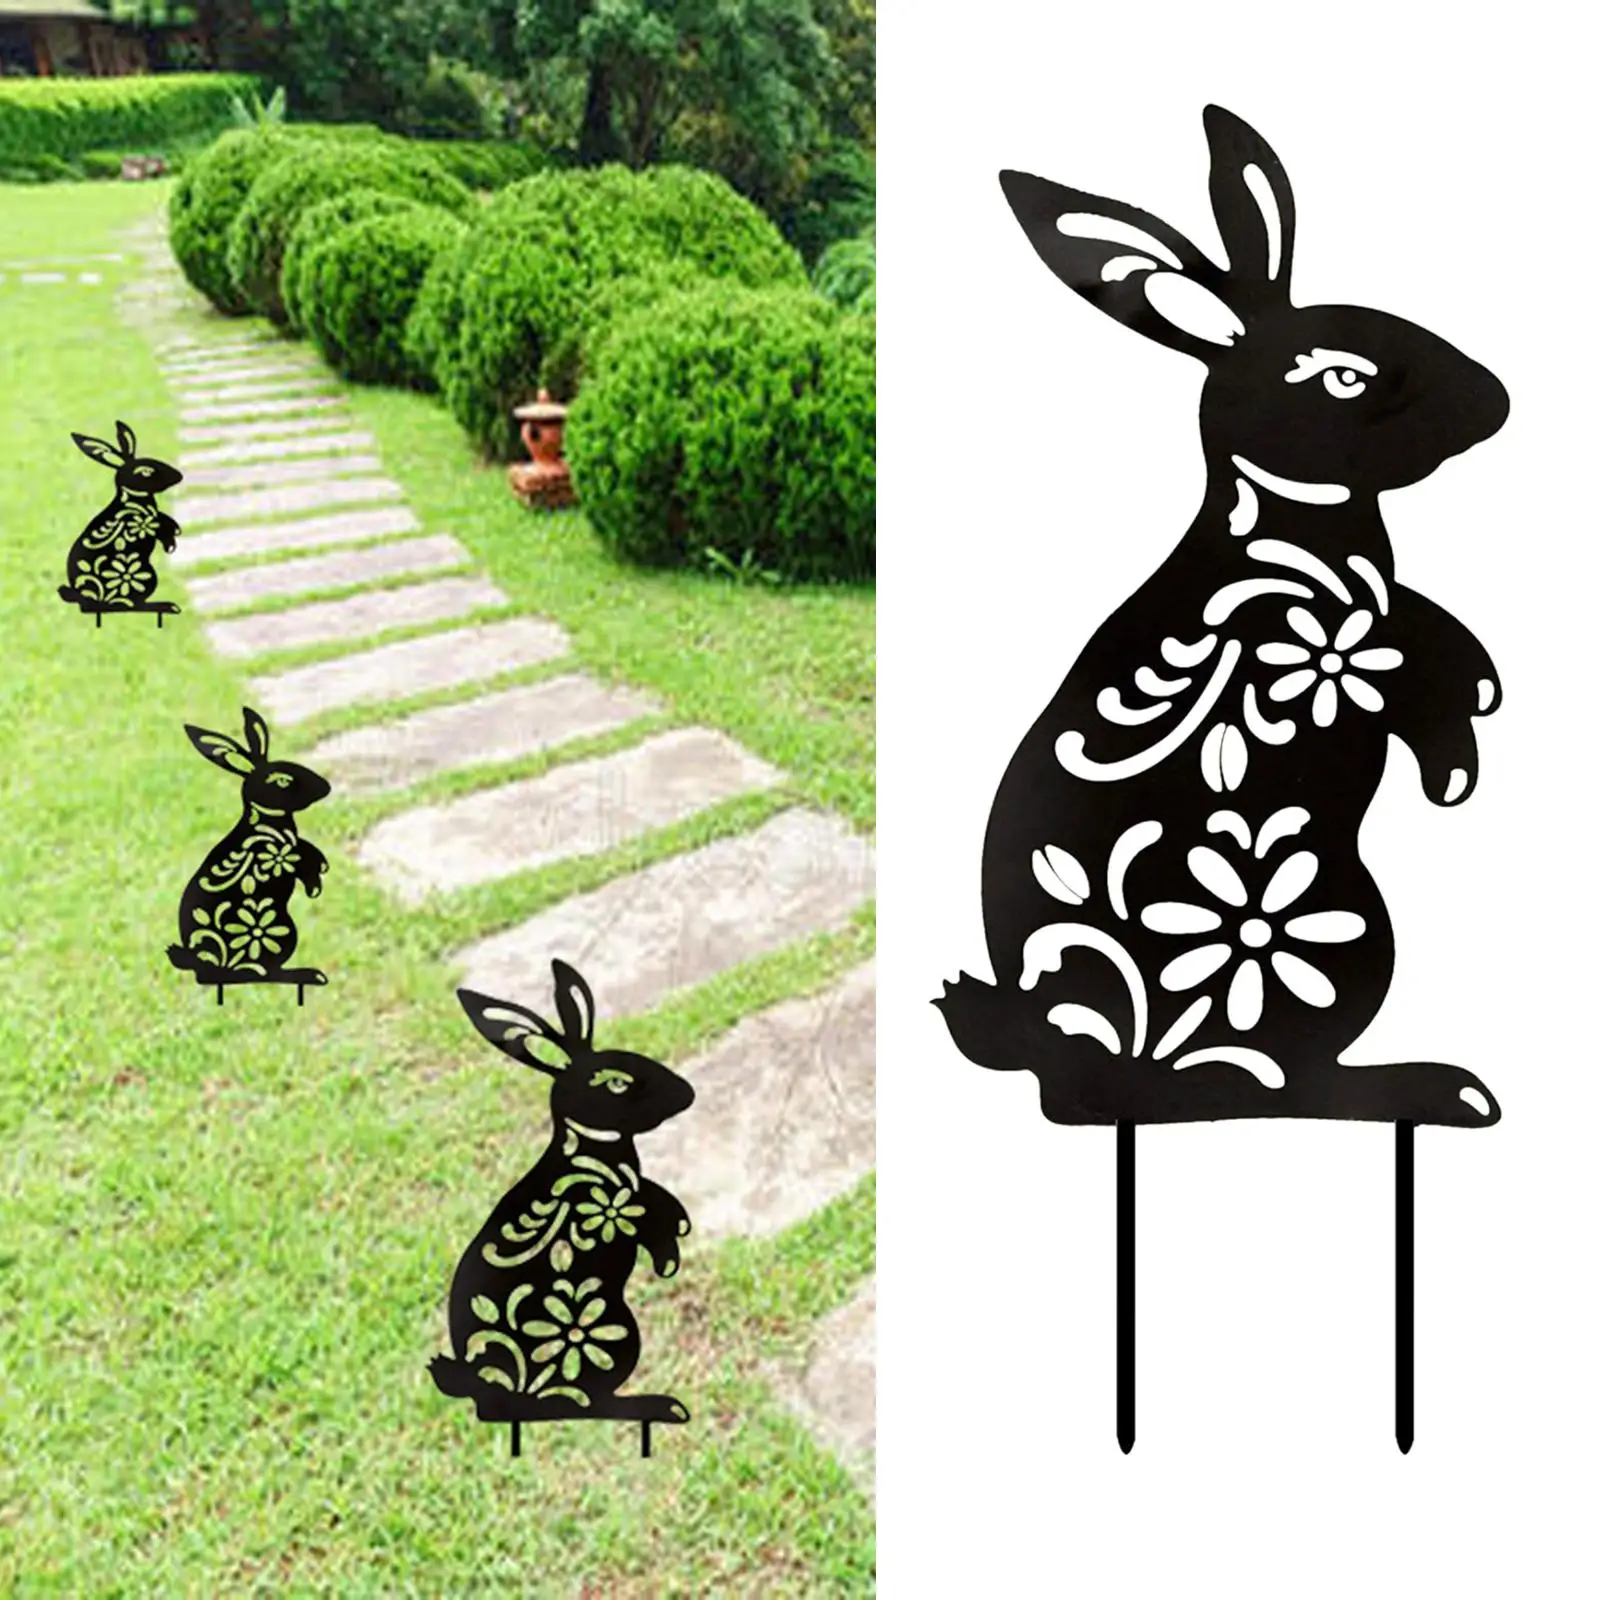 Bunny Silhouette Yard Art Garden Sculpture Garden Stake Animal Silhouette, for Festival Backyard Yard, Decoration Ornaments